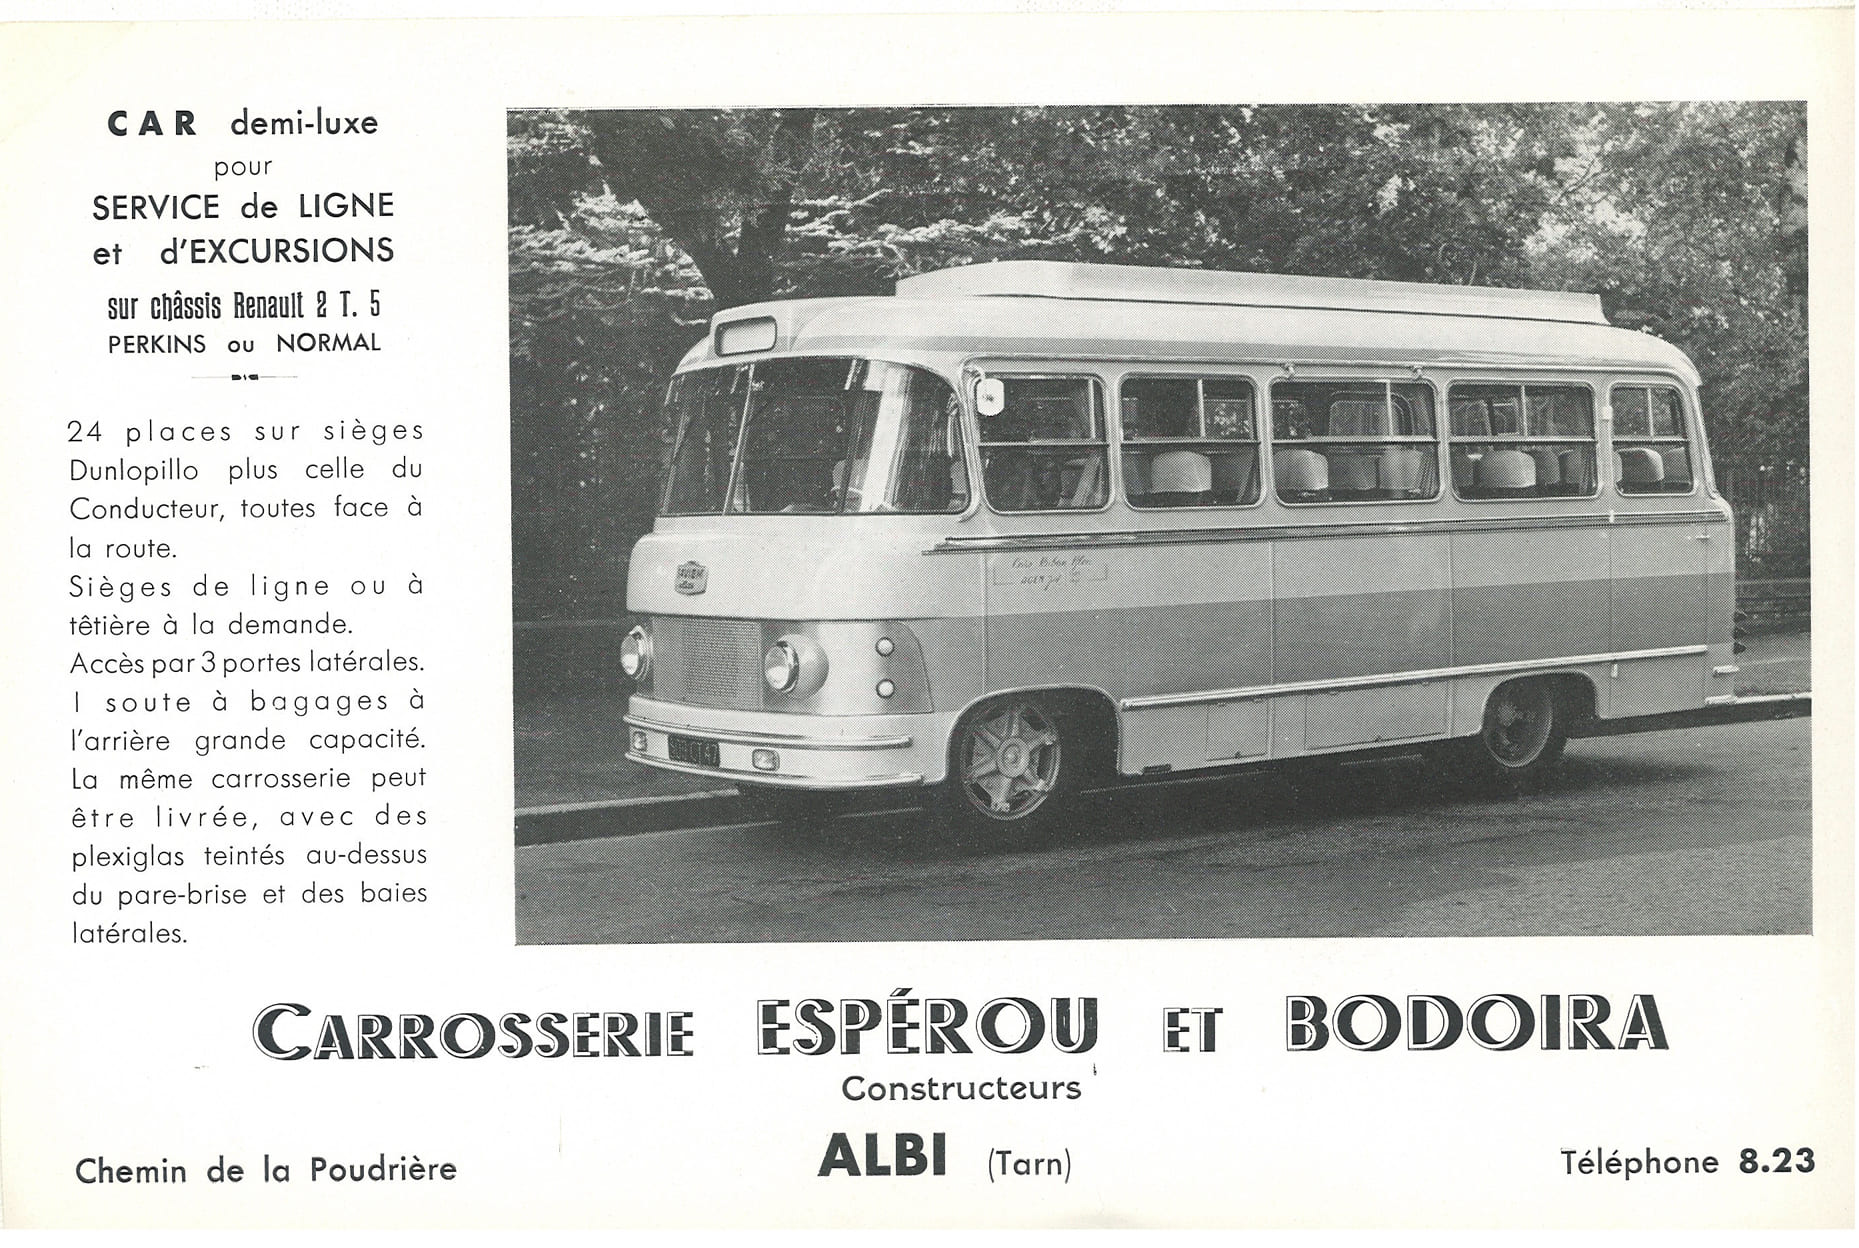 Article de journal sur la carrosserie Esperou-Bodoira en 1955